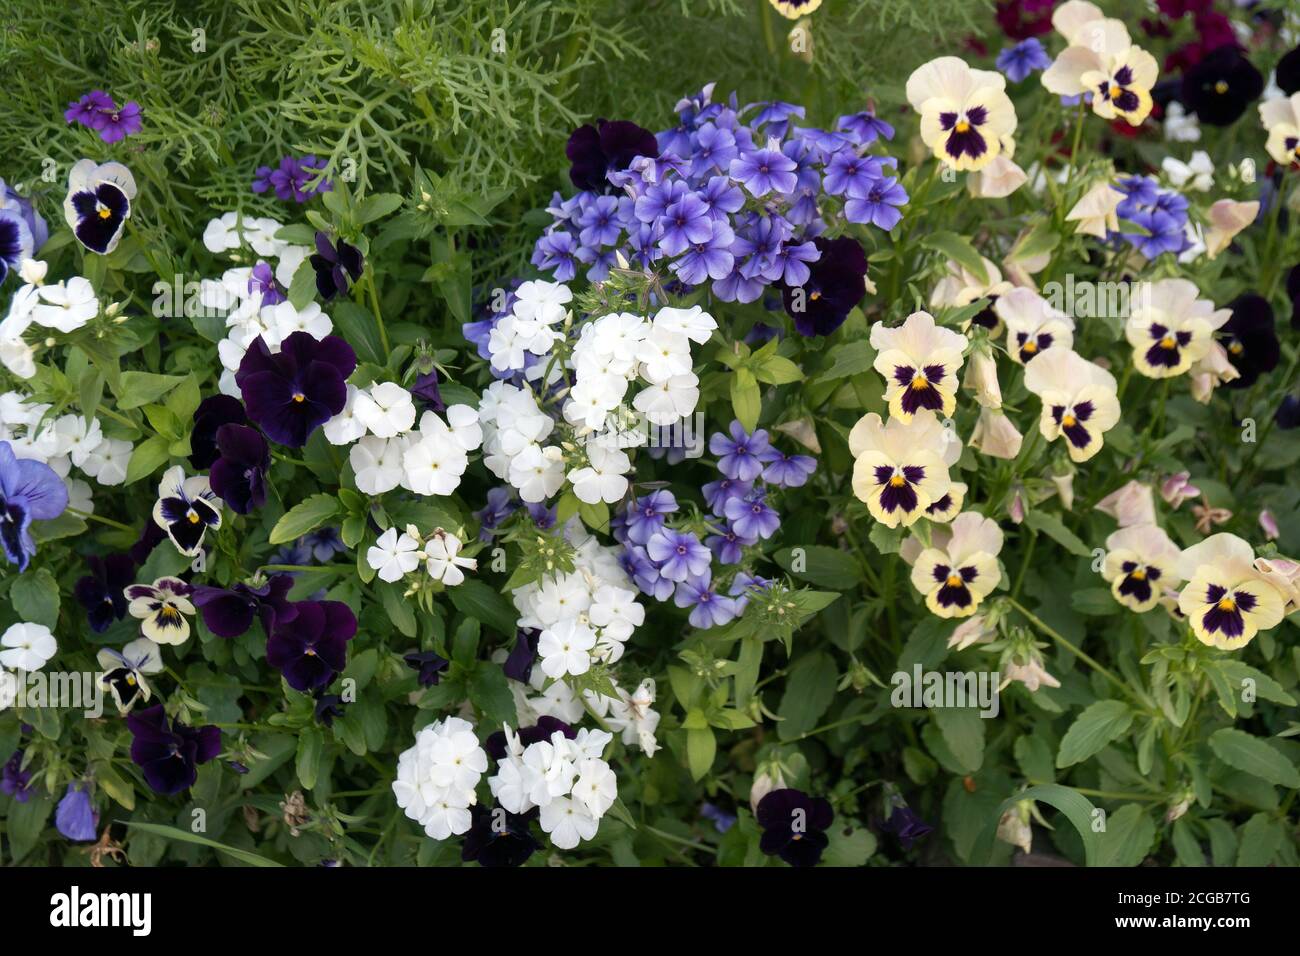 Drummond Phlox (lat. Phlox drummondii) and garden pansies (lat. Víola wittrockiana) bloom in summer in the flowerbed. Stock Photo